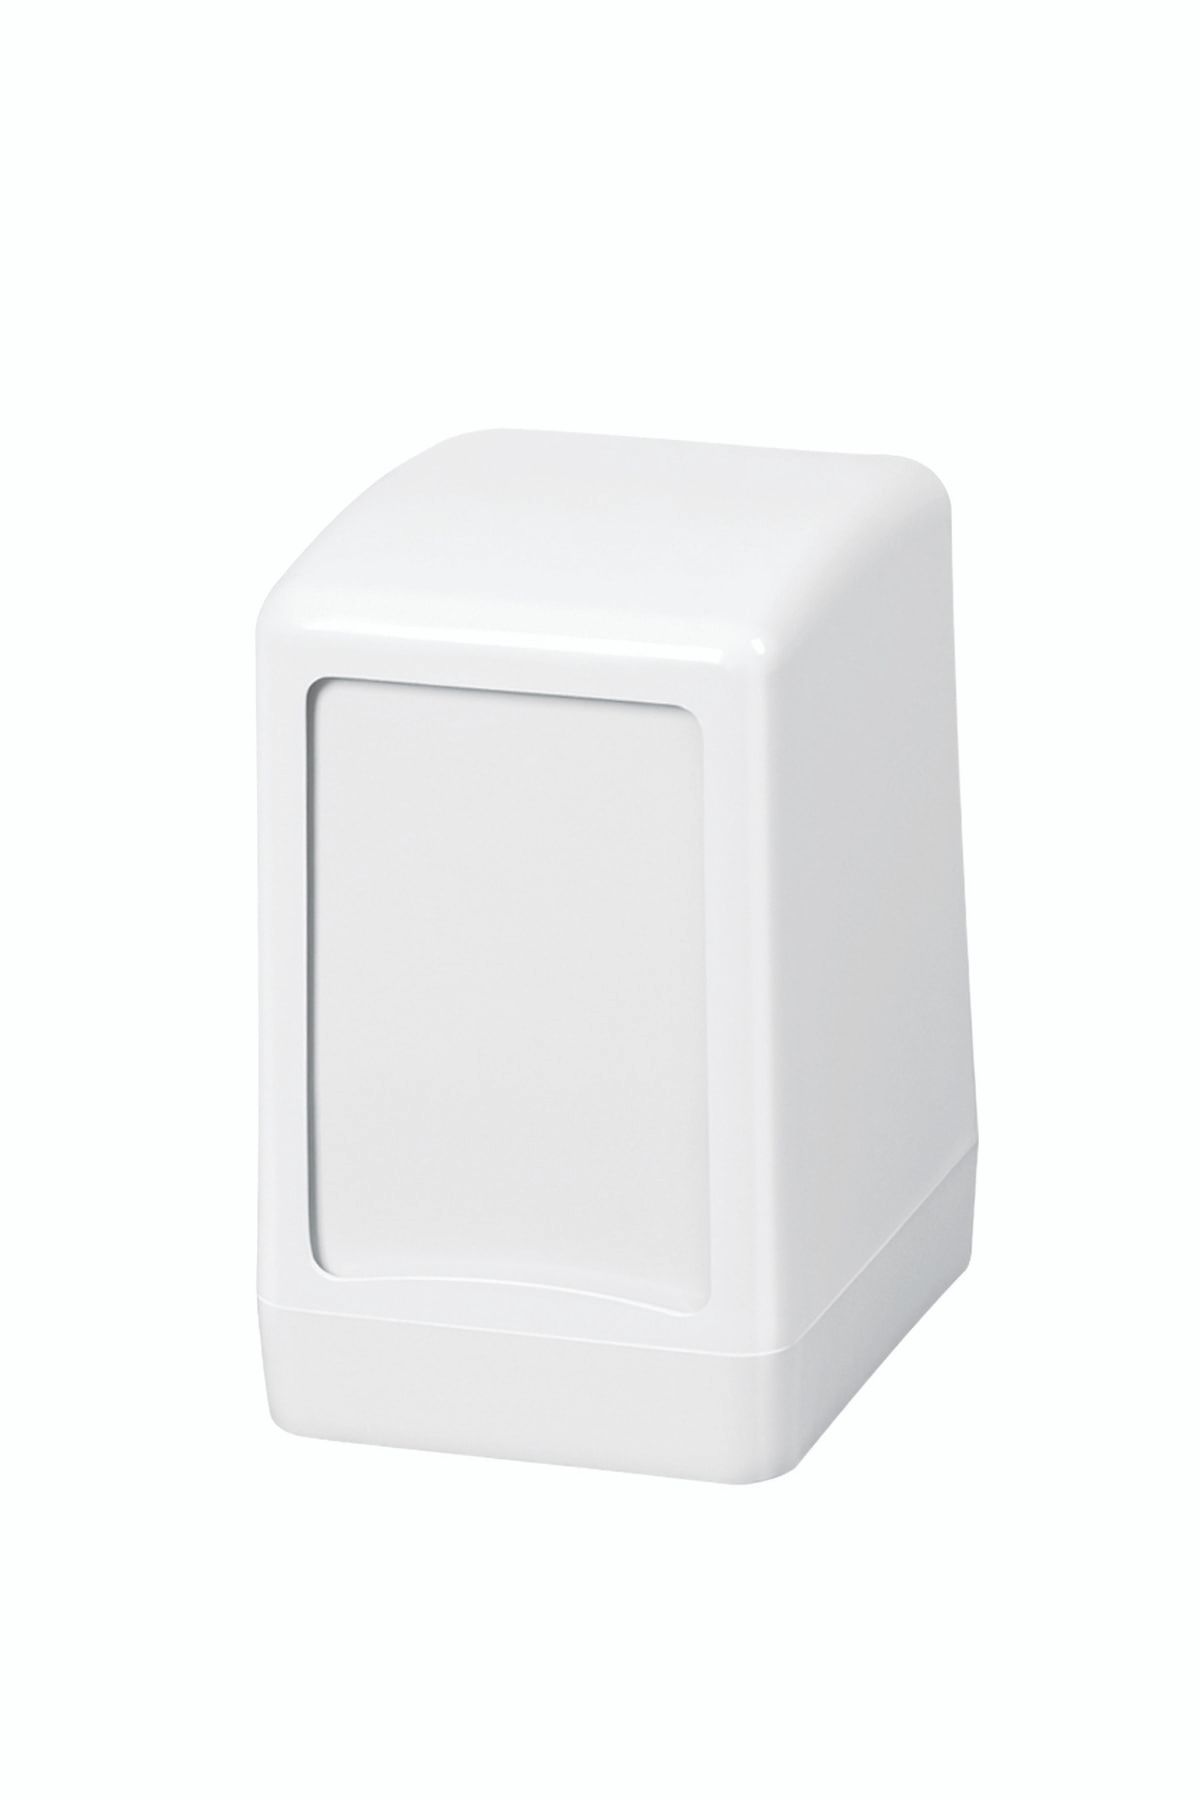 Palex (ün-ev) Masa Üstü Peçetelik (masa Üstü Peçete Dispenseri) (hafif) Beyaz 3474-h-0